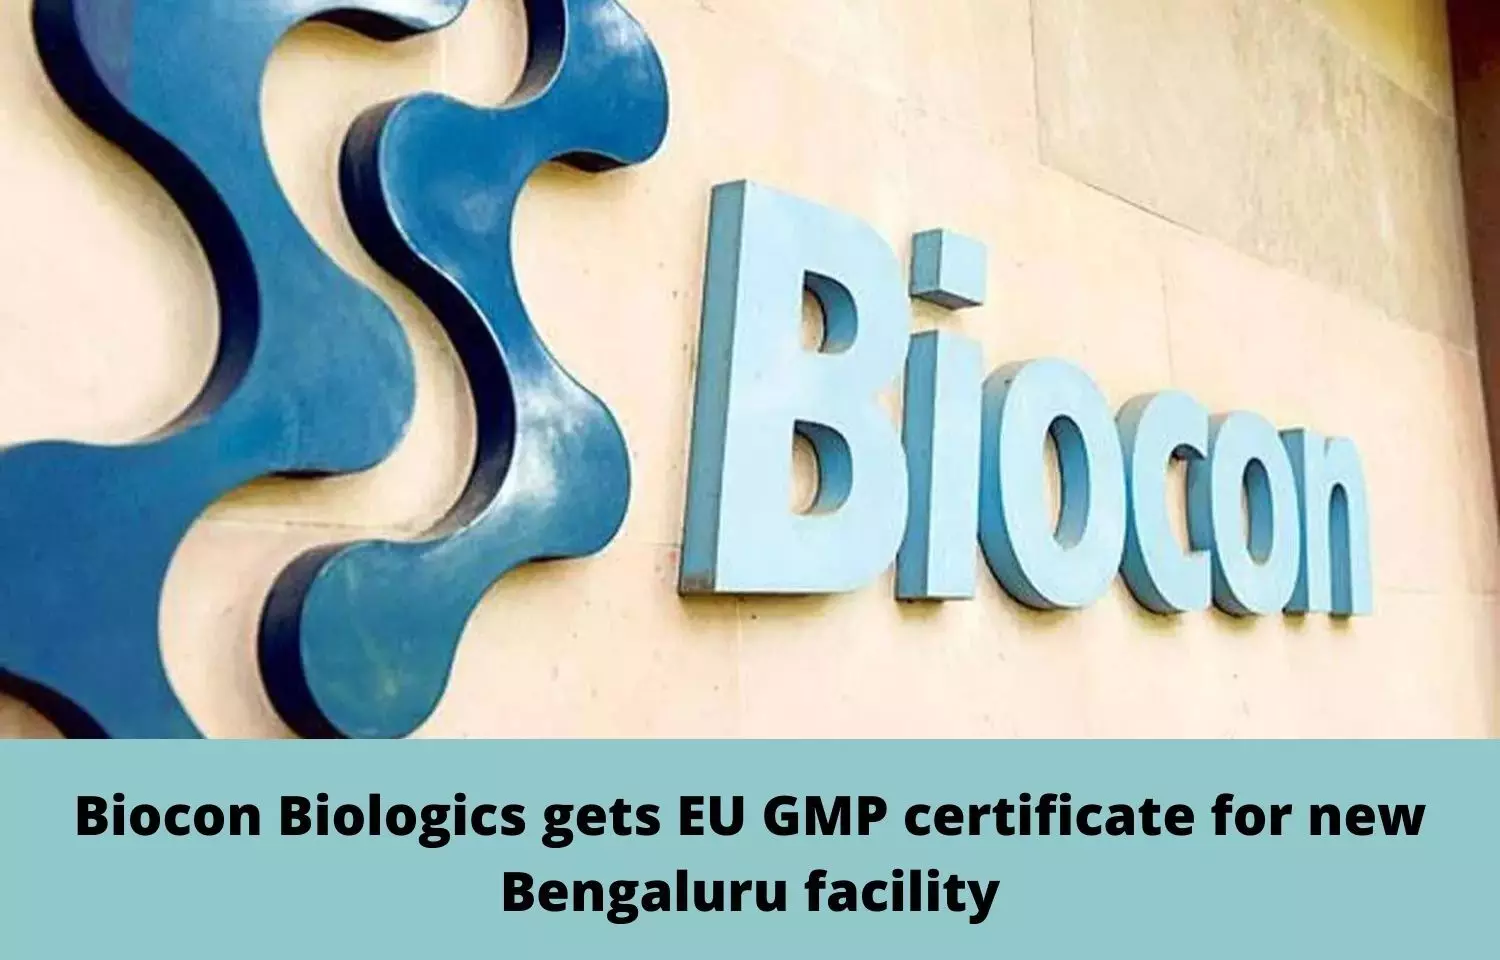 Biocon Biologics gets EU GMP certificate for new Bengaluru facility